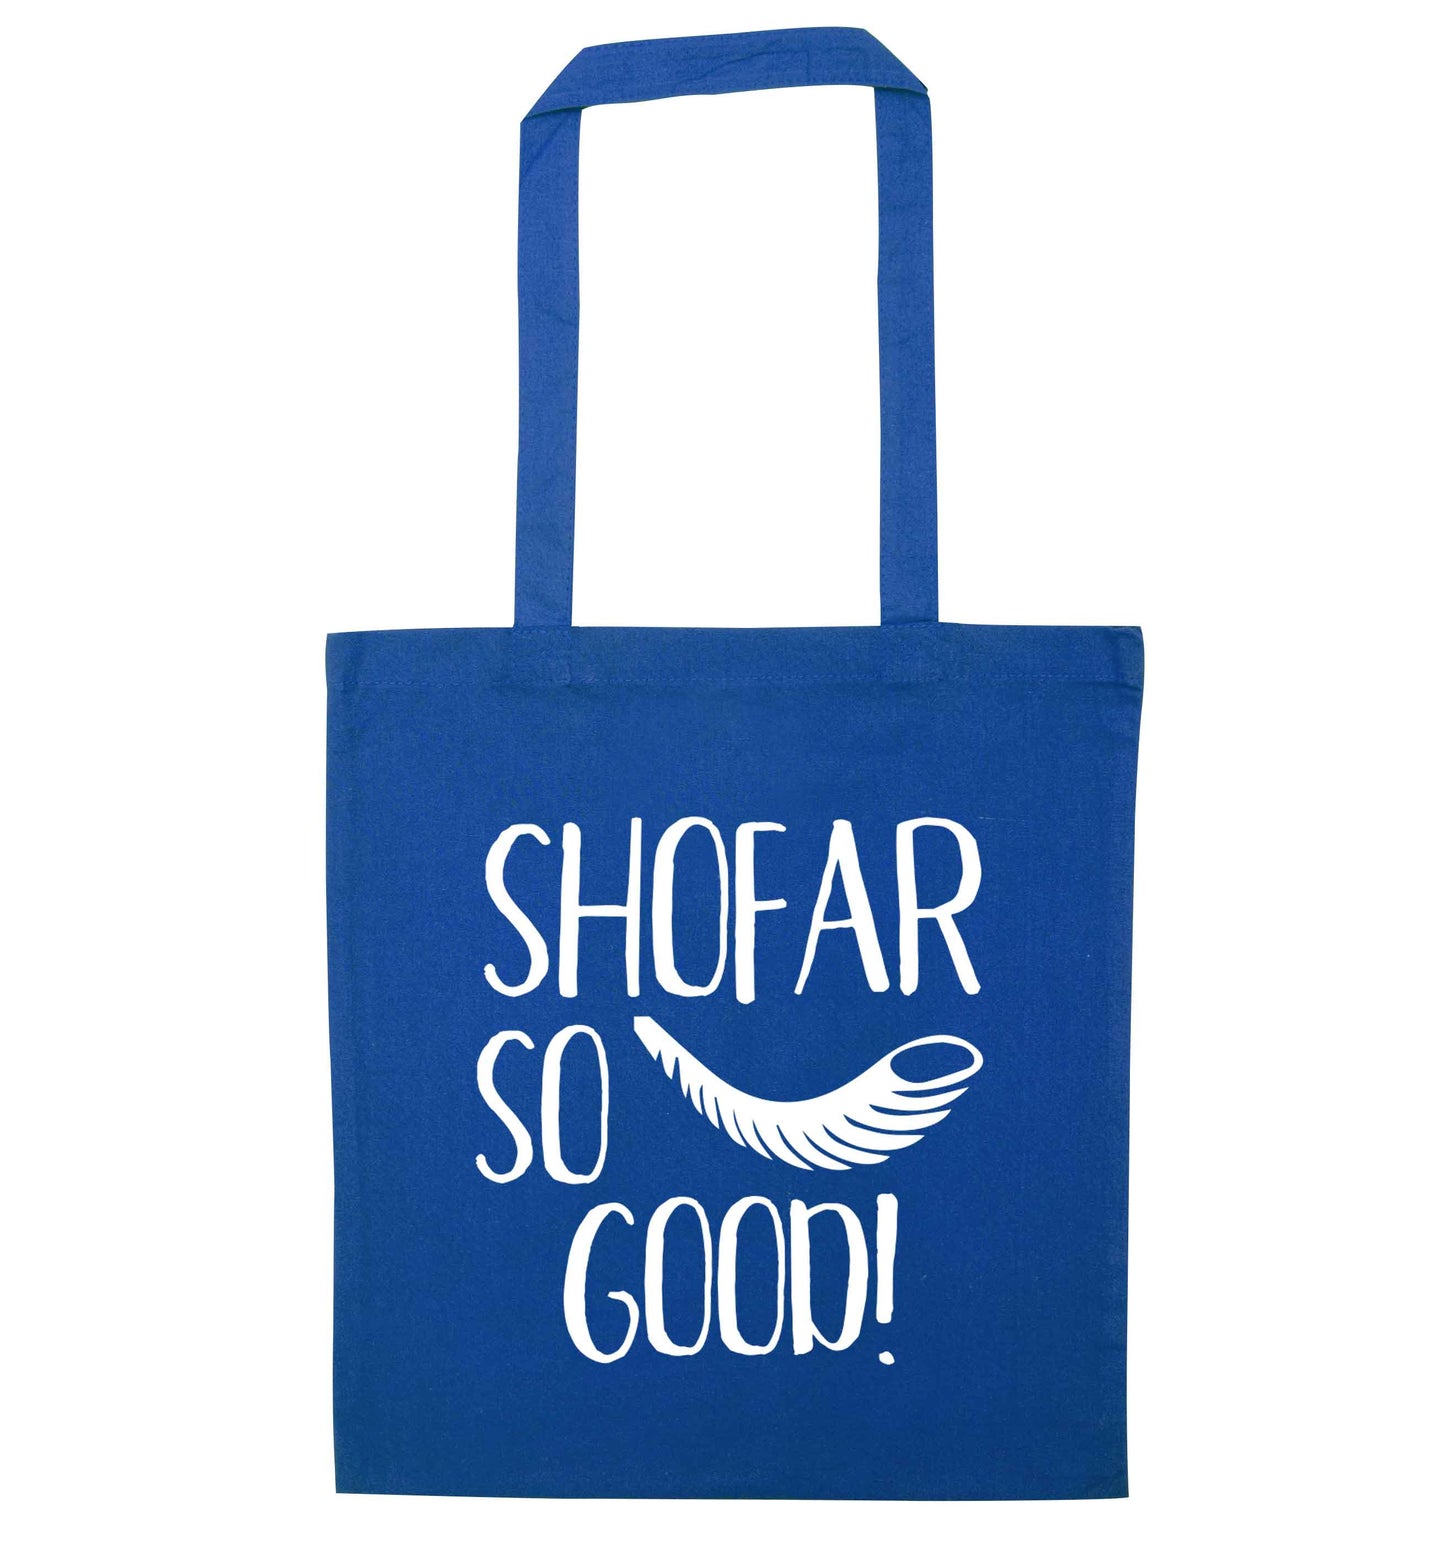 Shofar so good! blue tote bag